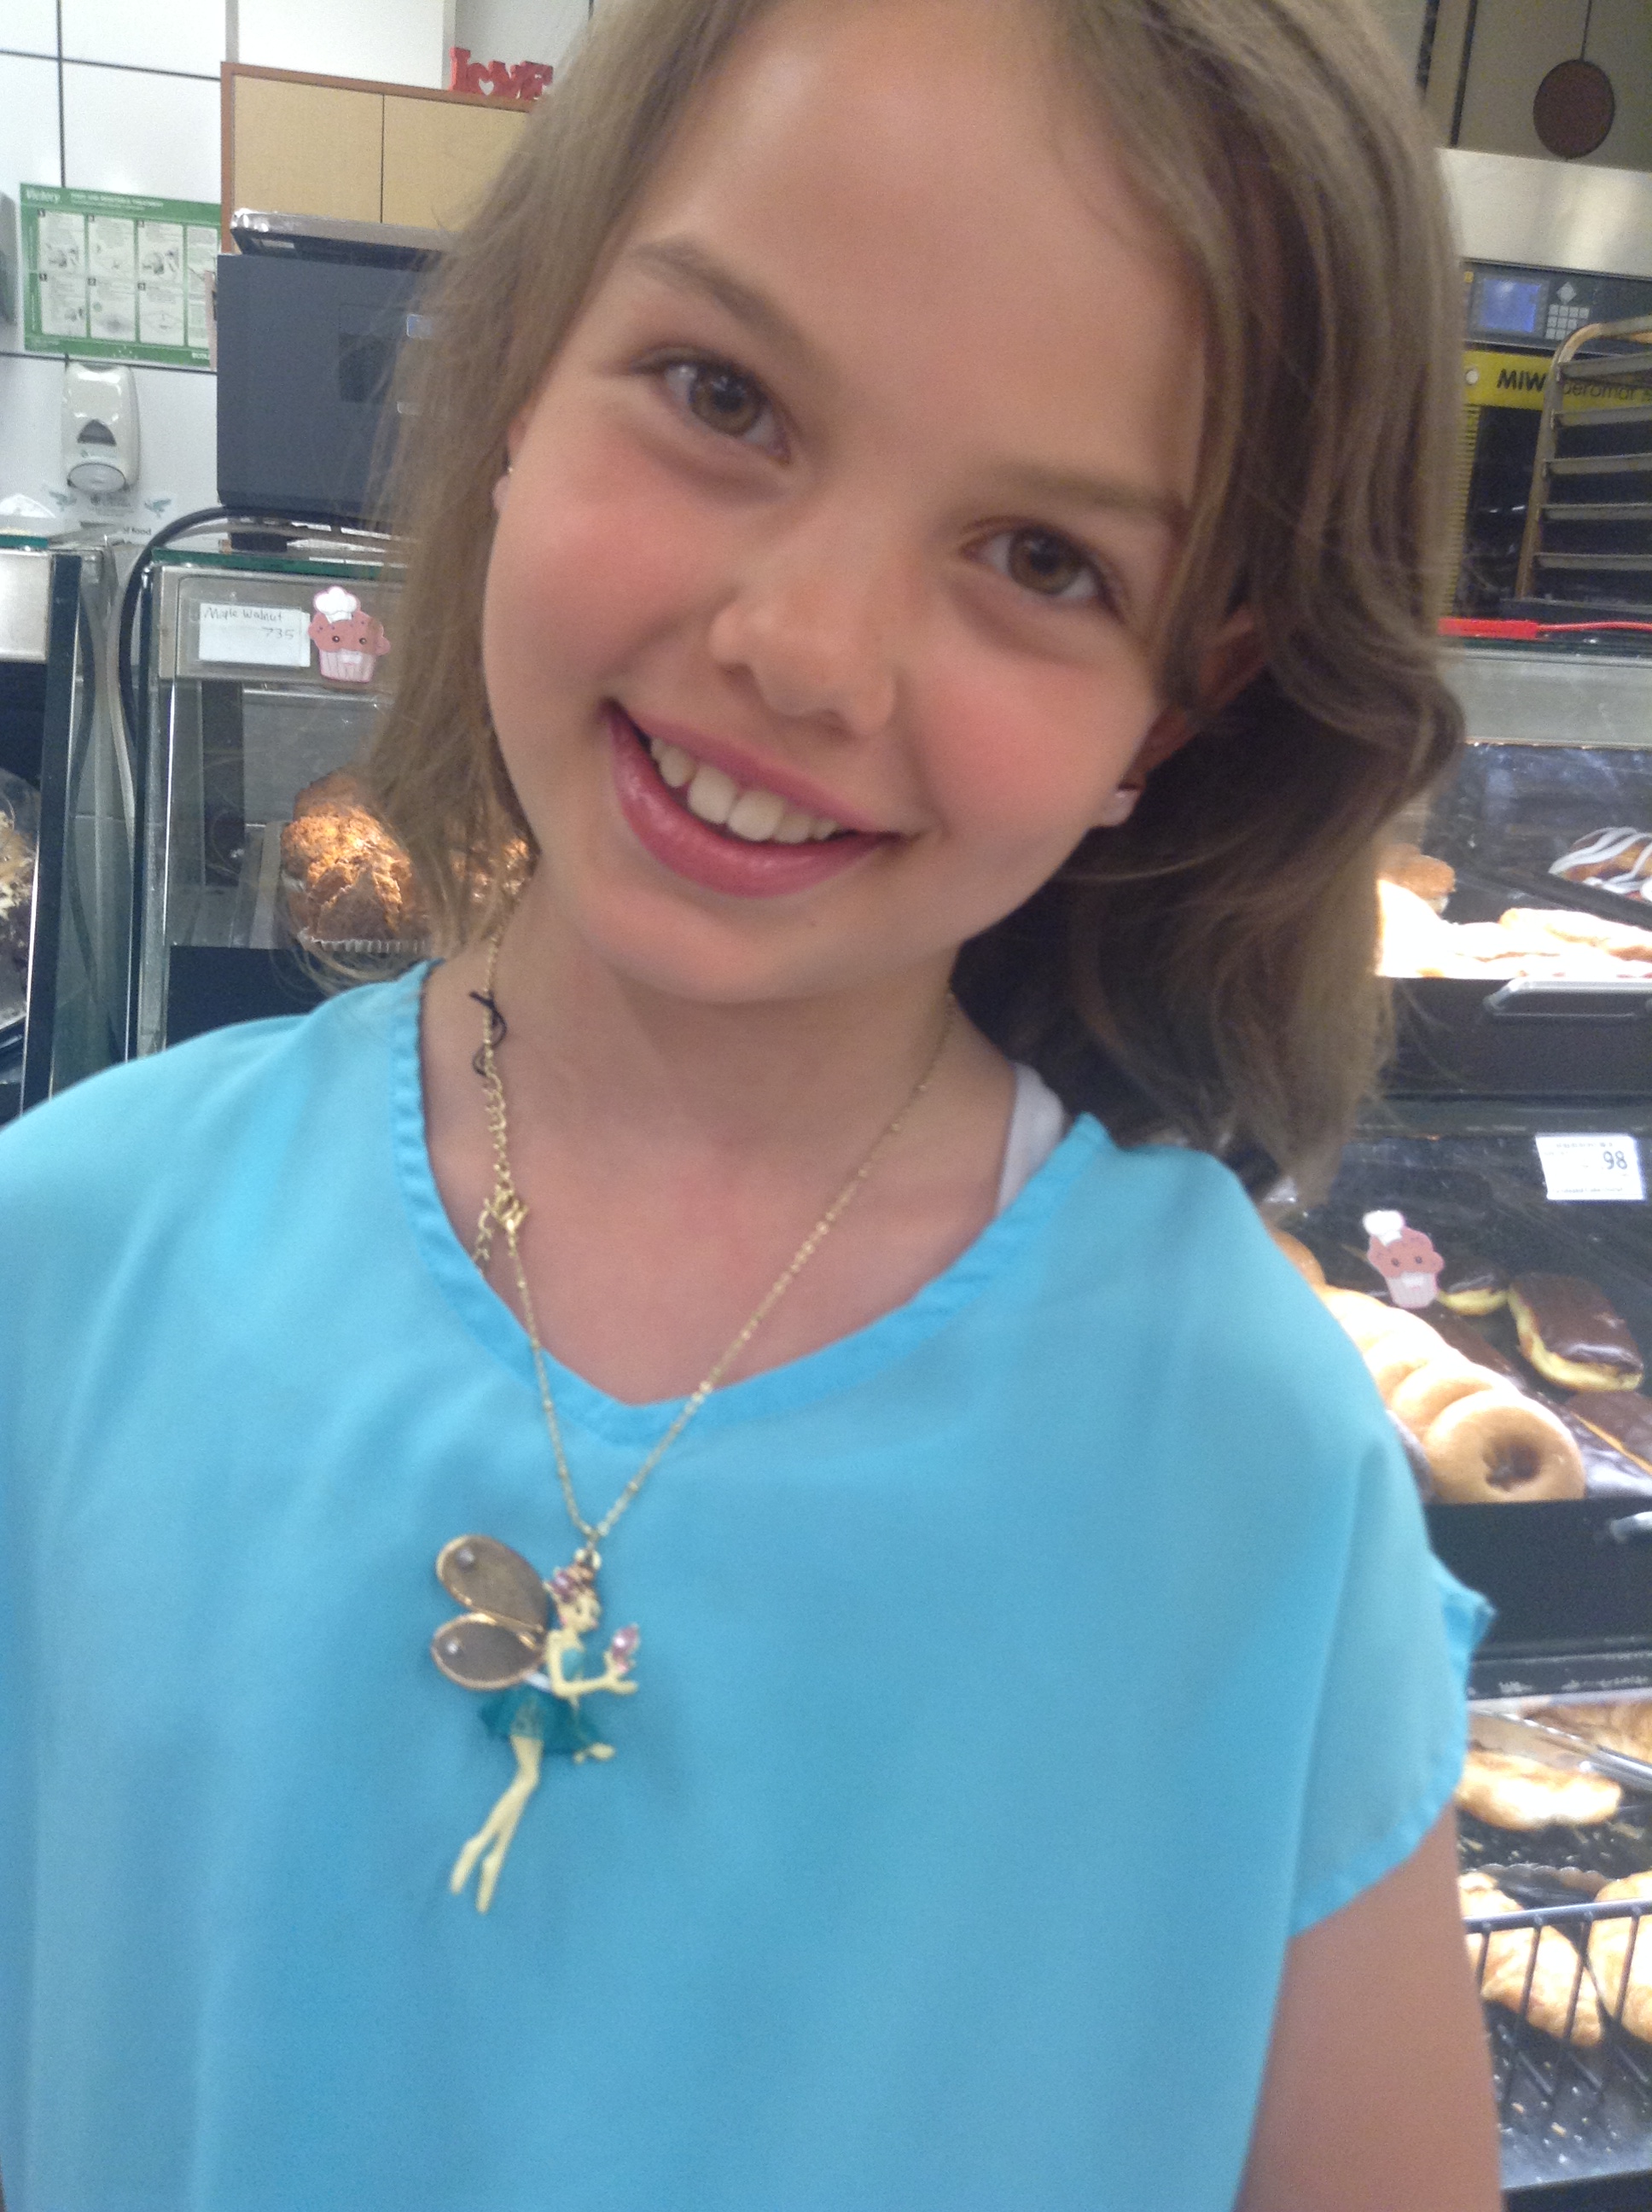 Rachel with her fairy necklace